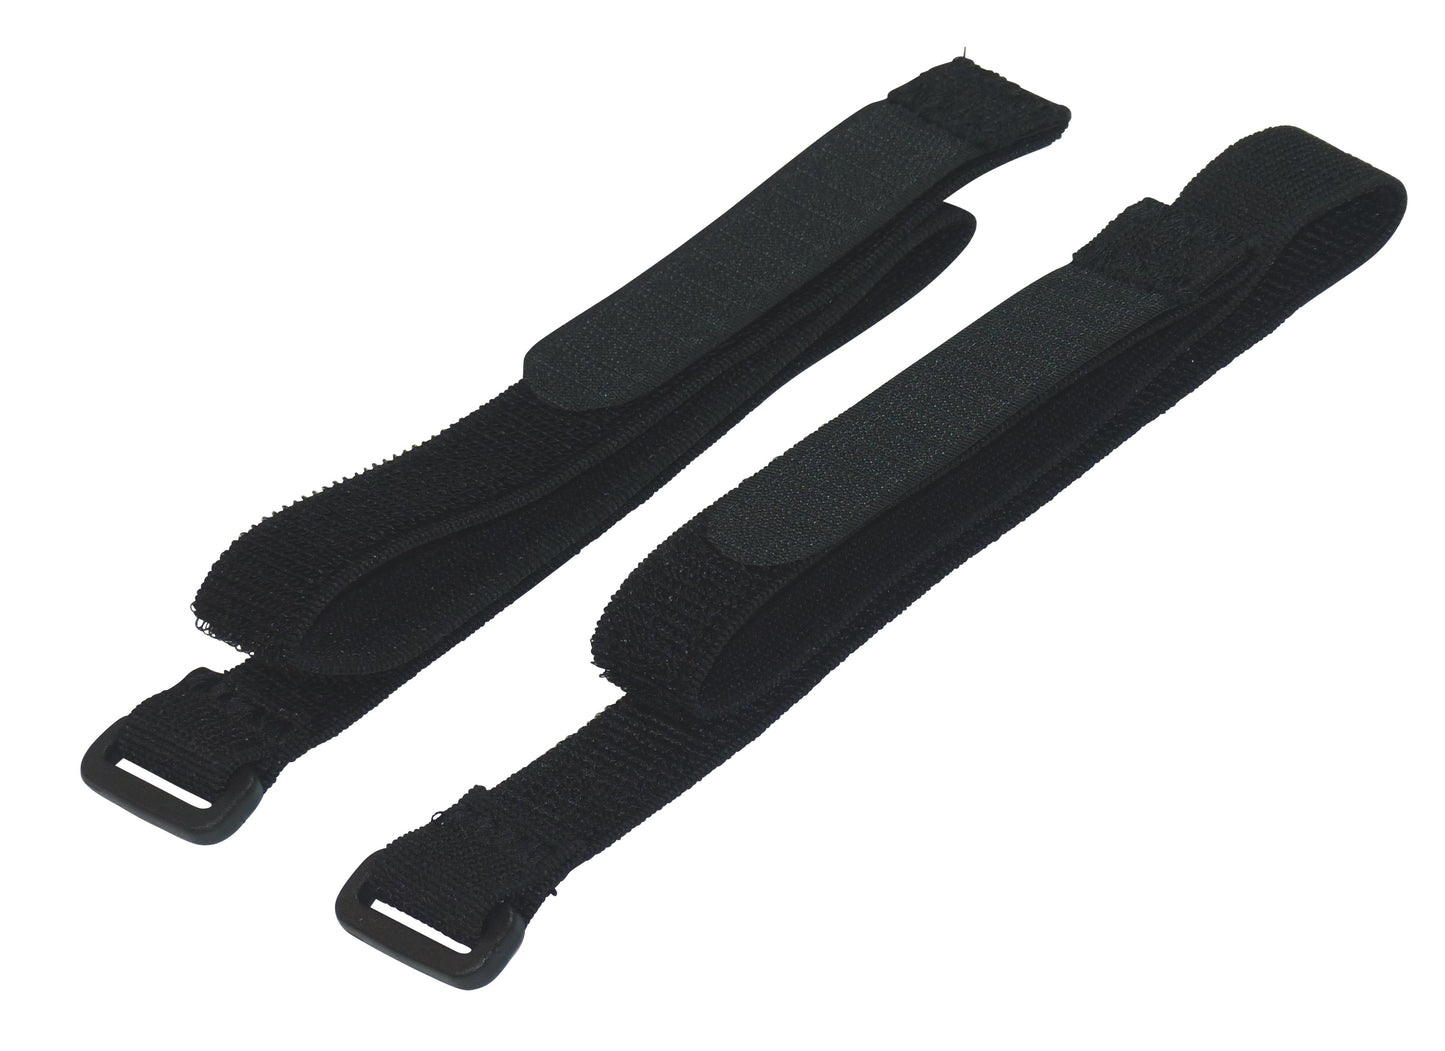 Benristraps 25mm Elastic Hook and Loop Cinch Strap in Black, Pack of Two (5)